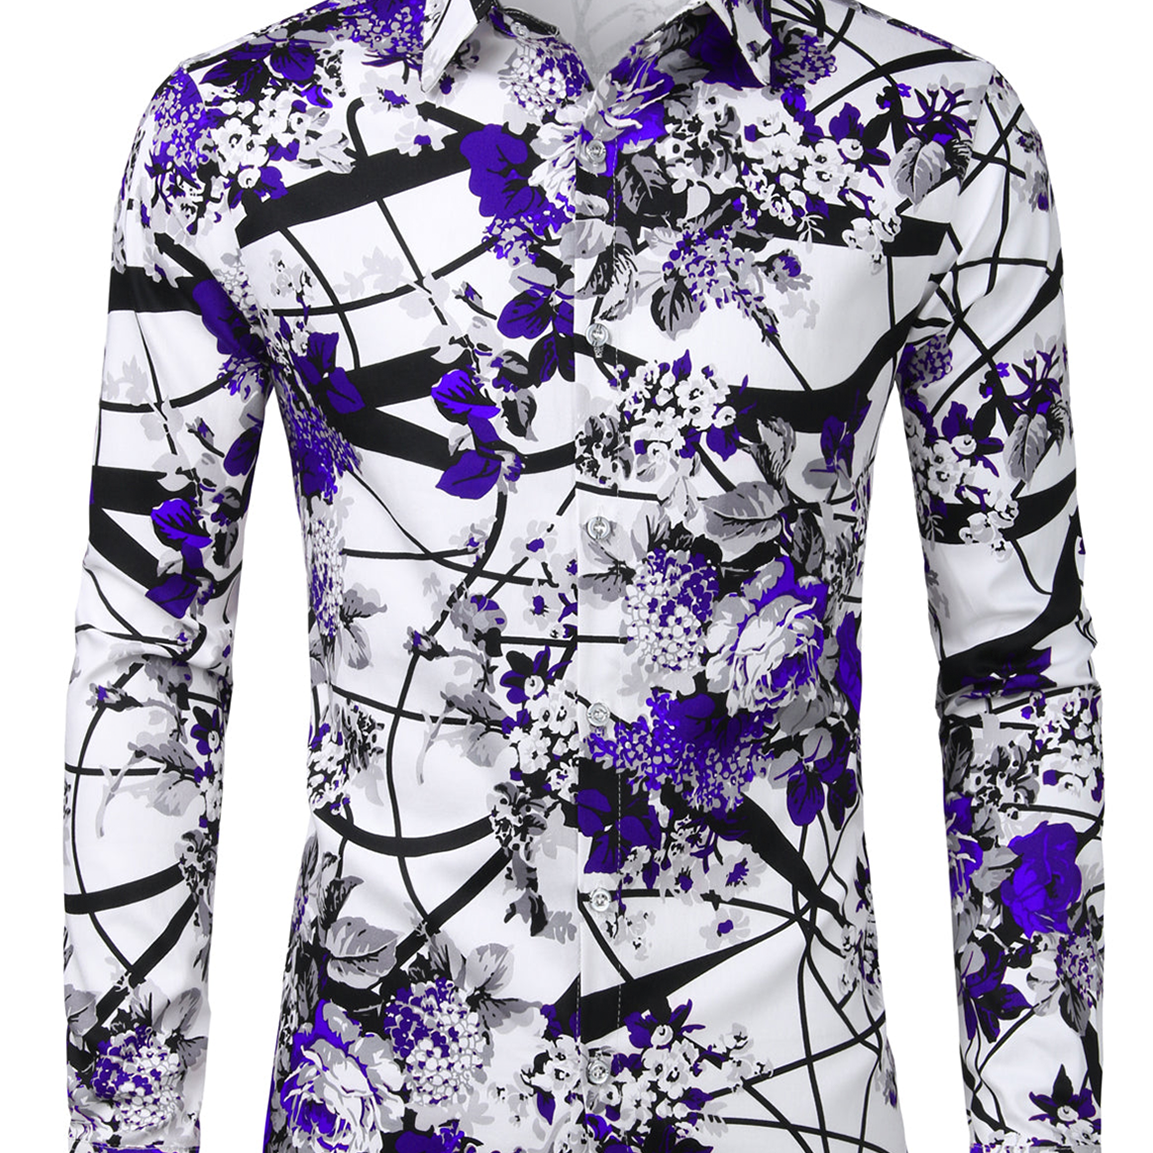 Men's Floral Print Cotton Casual Button Up Breathable Long Sleeve Dress Shirt